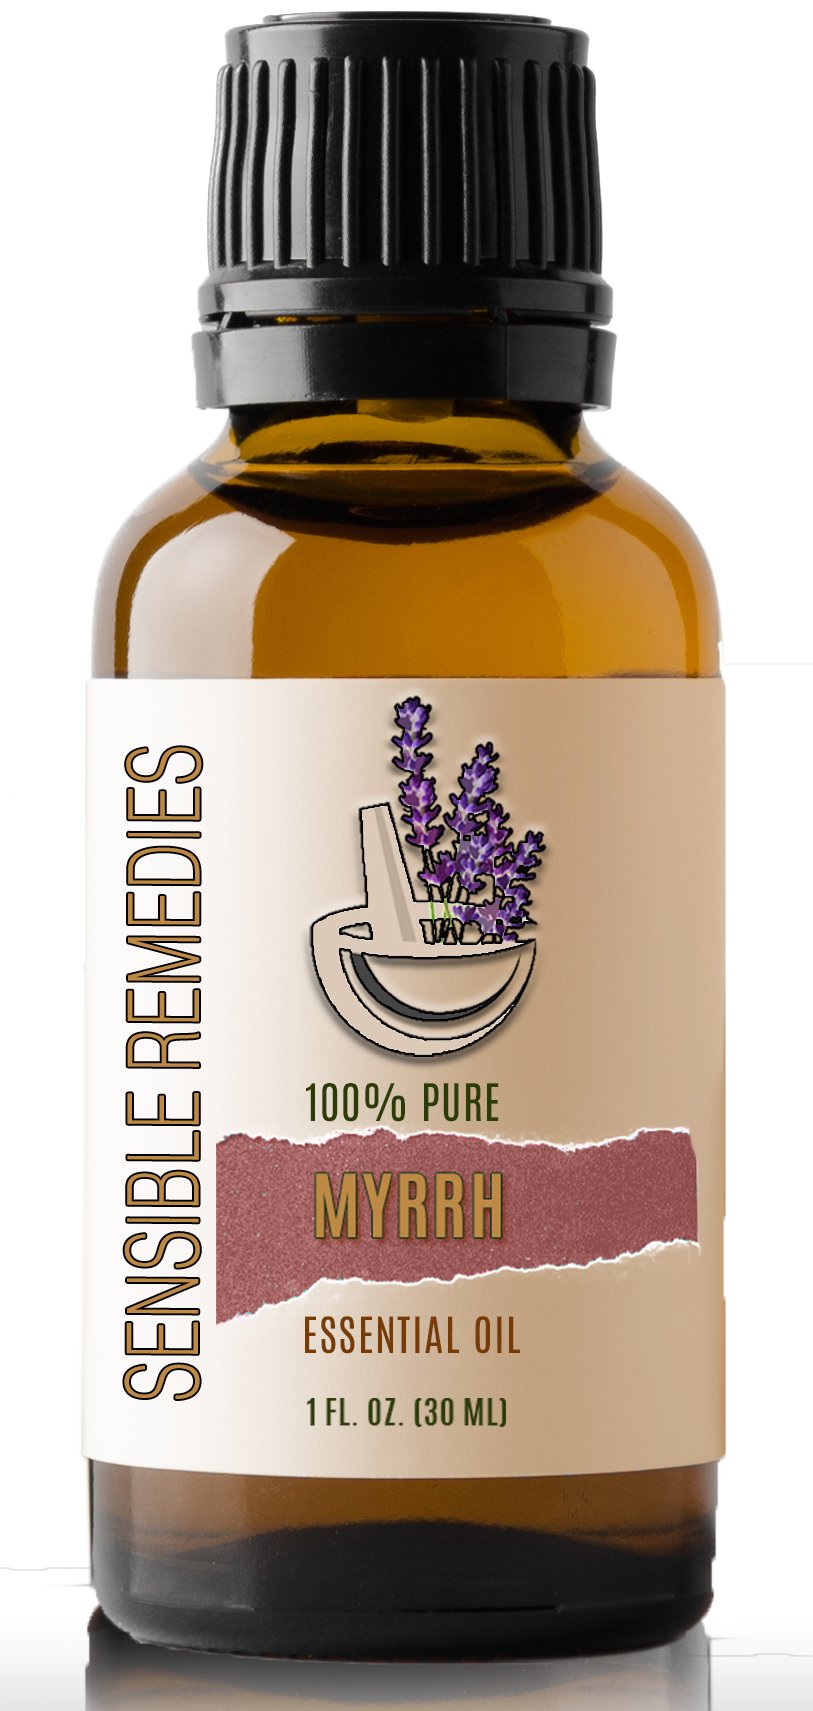 Myrrh Essential Oil*